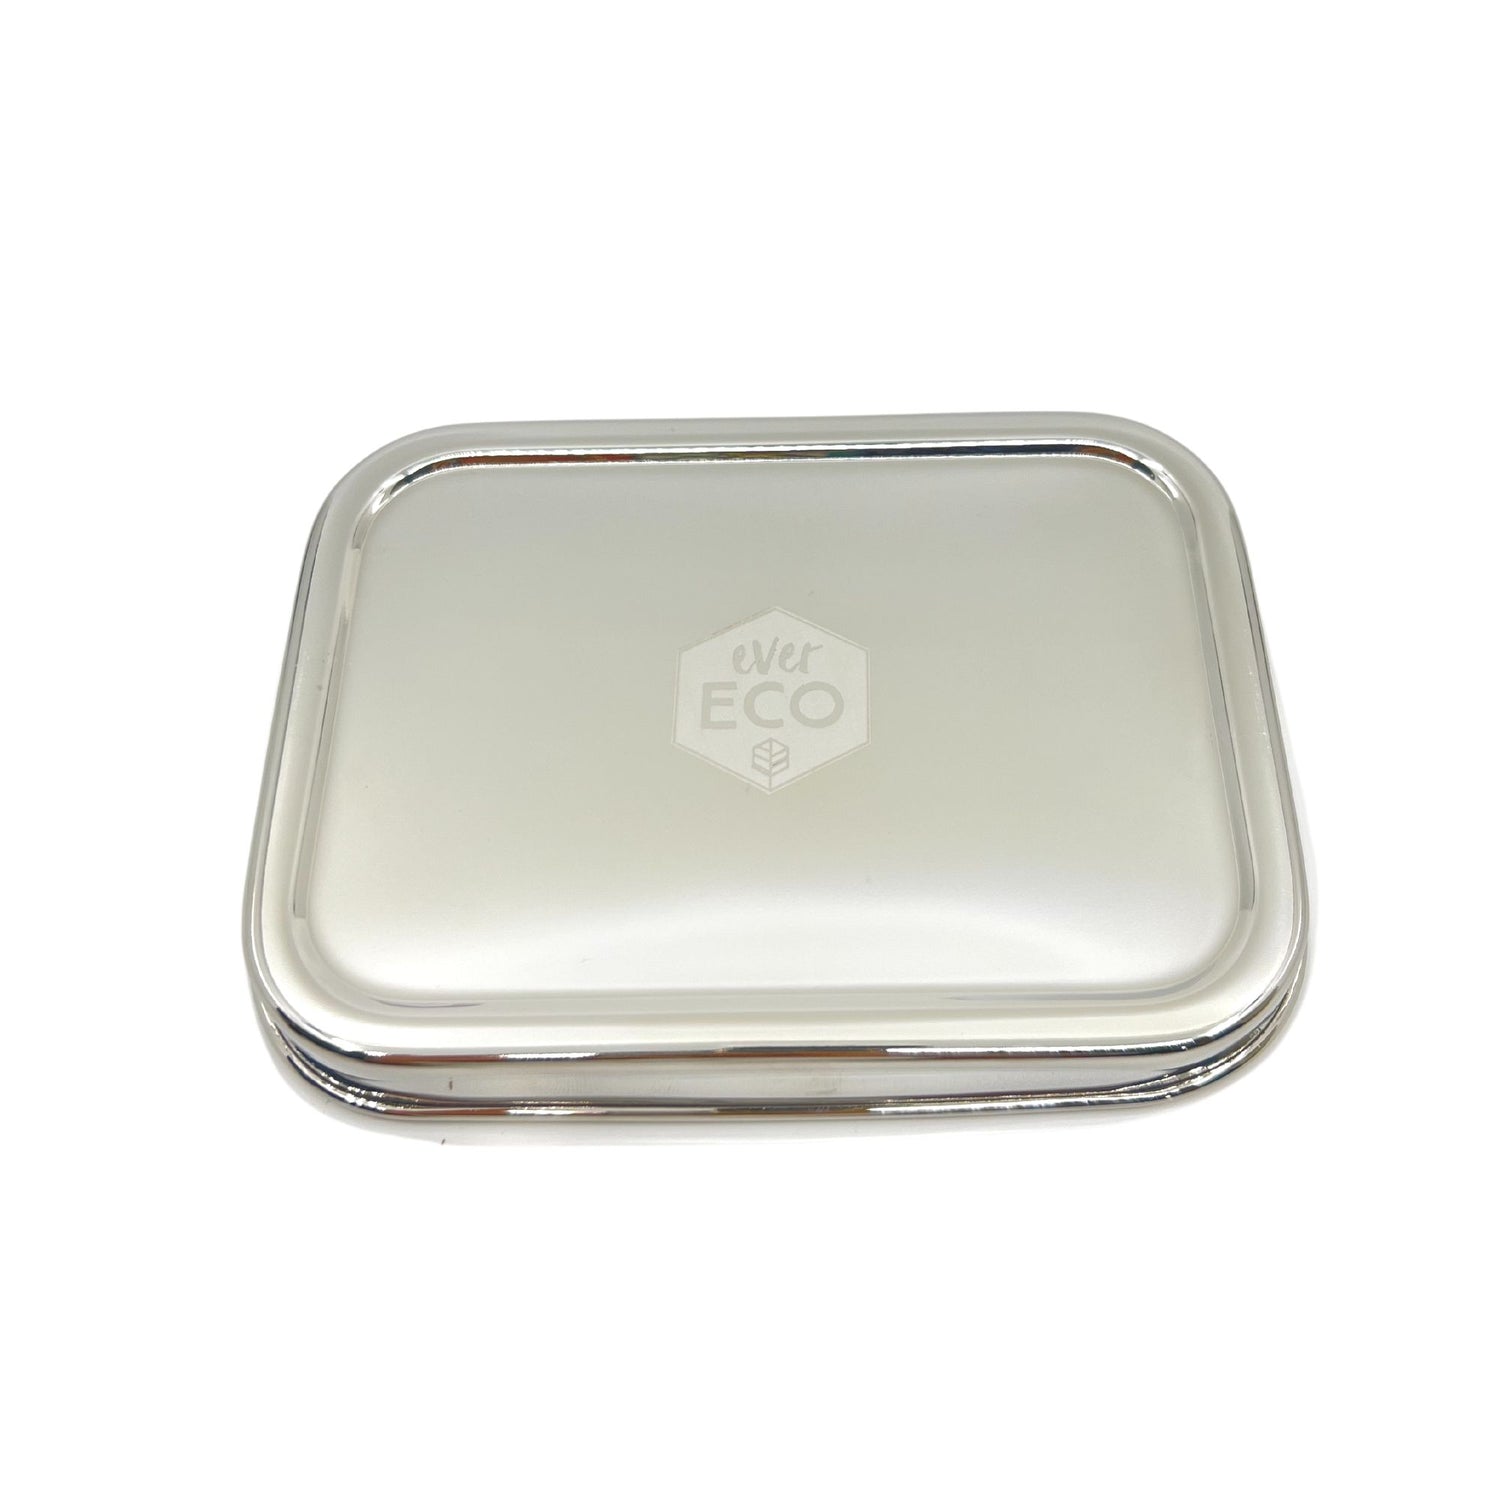 Ever Eco Stackable Bento Box Lid